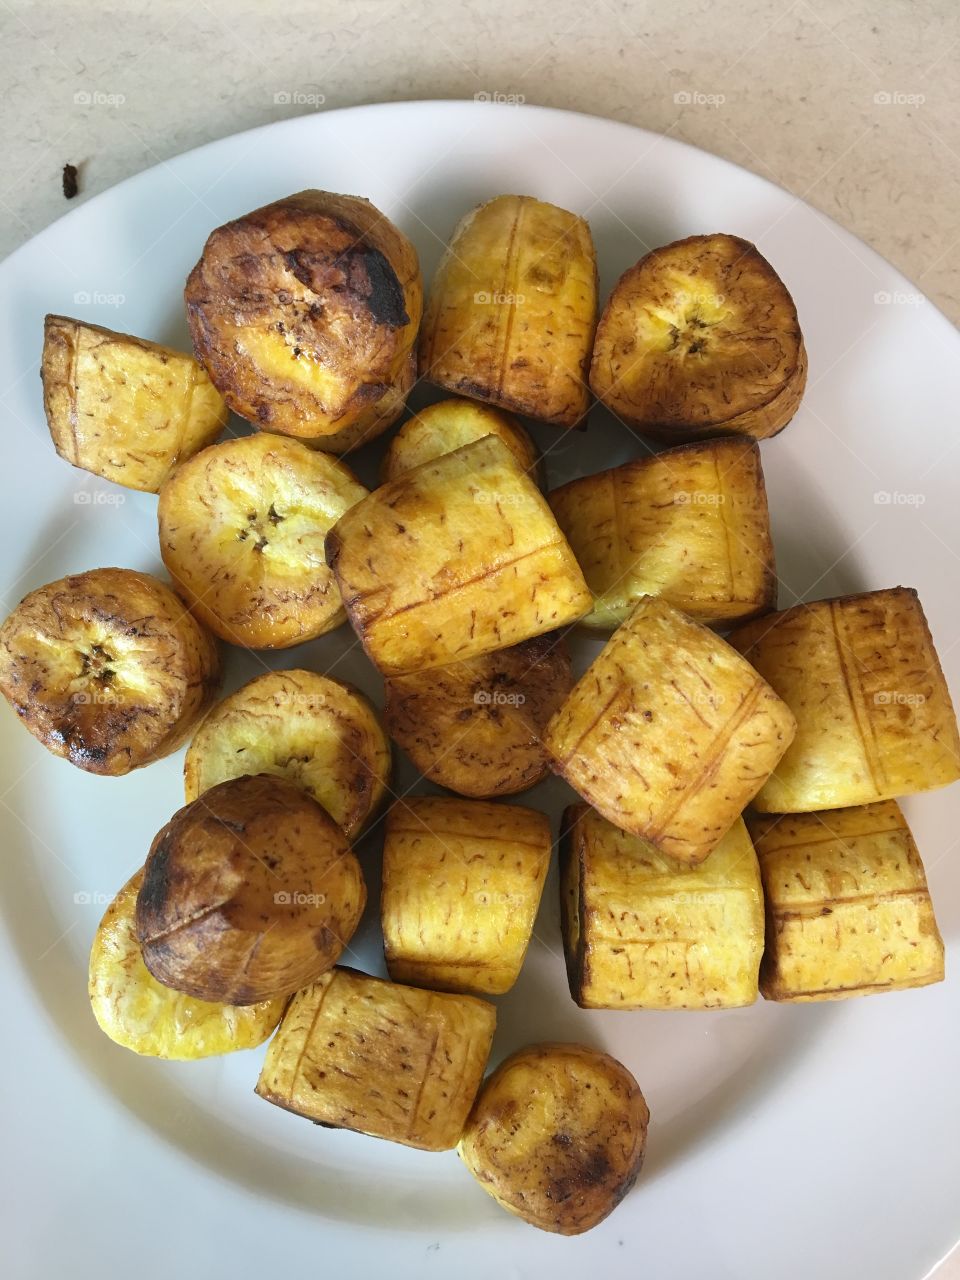 Unpressed sliced fried plantain - tostones